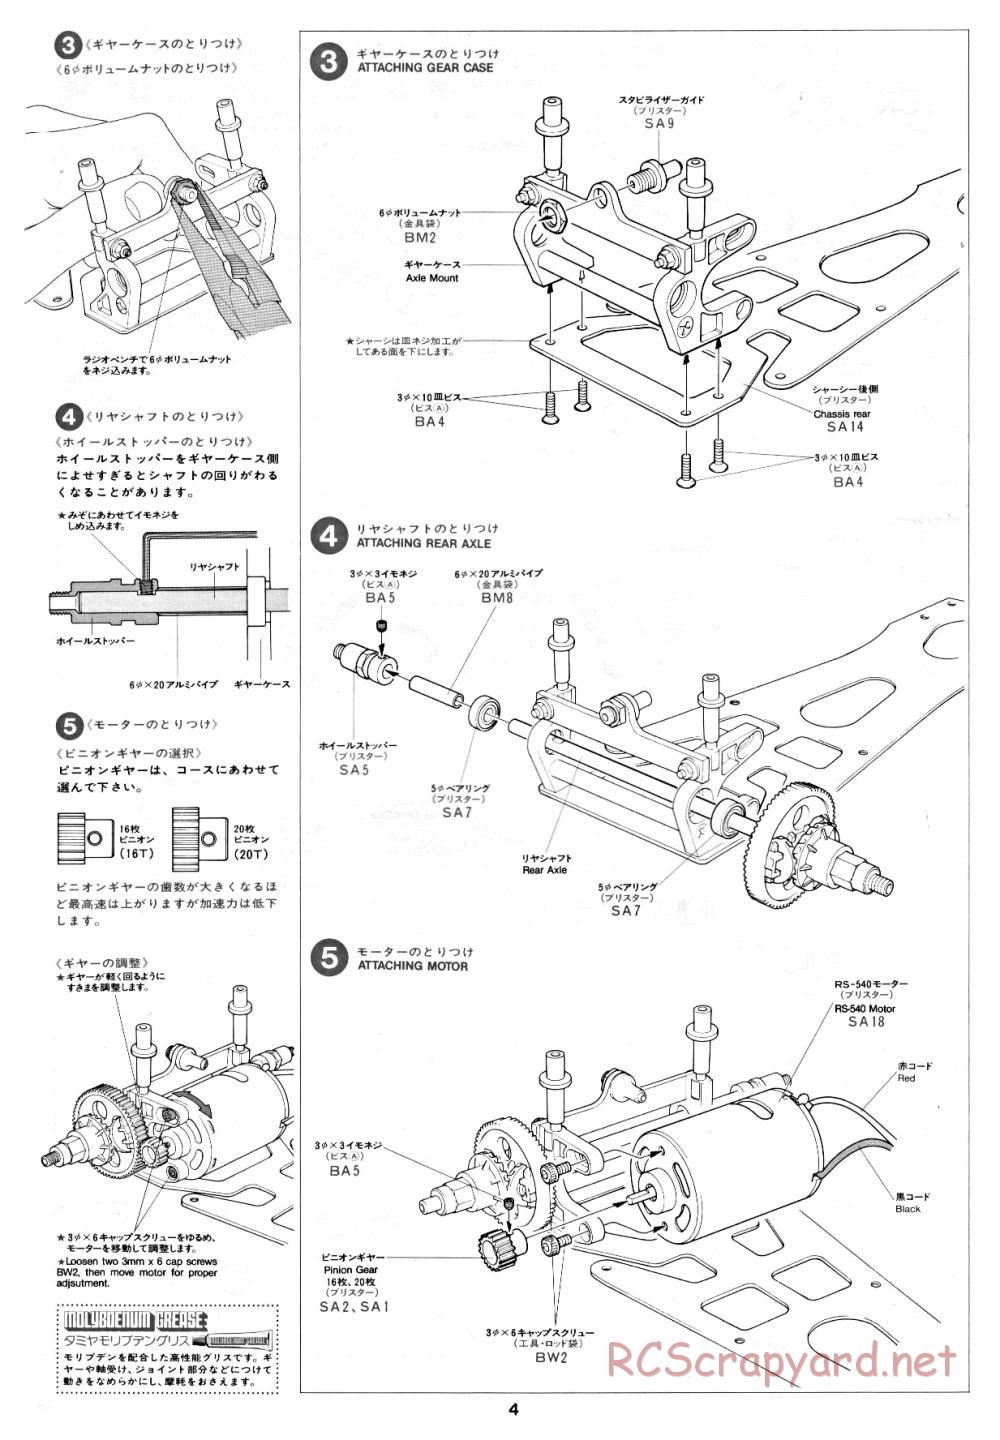 Tamiya - Toyota Tom's 84C - RM MK.6 - 58049 - Manual - Page 4